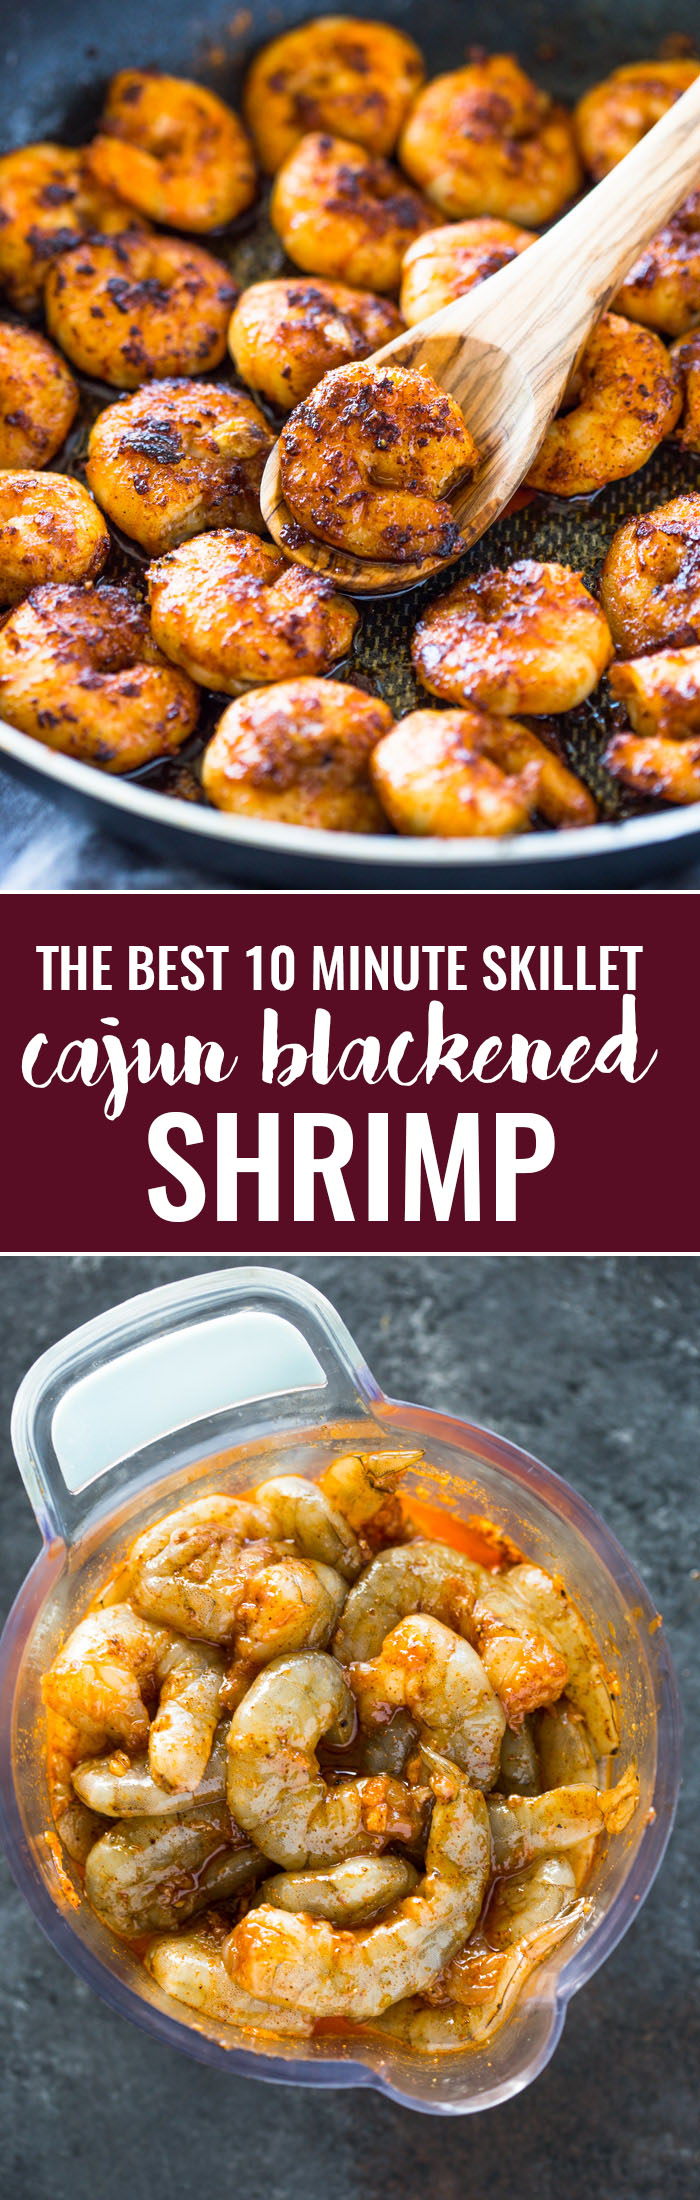 The Best 10 Minute Cajun Blackened Shrimp